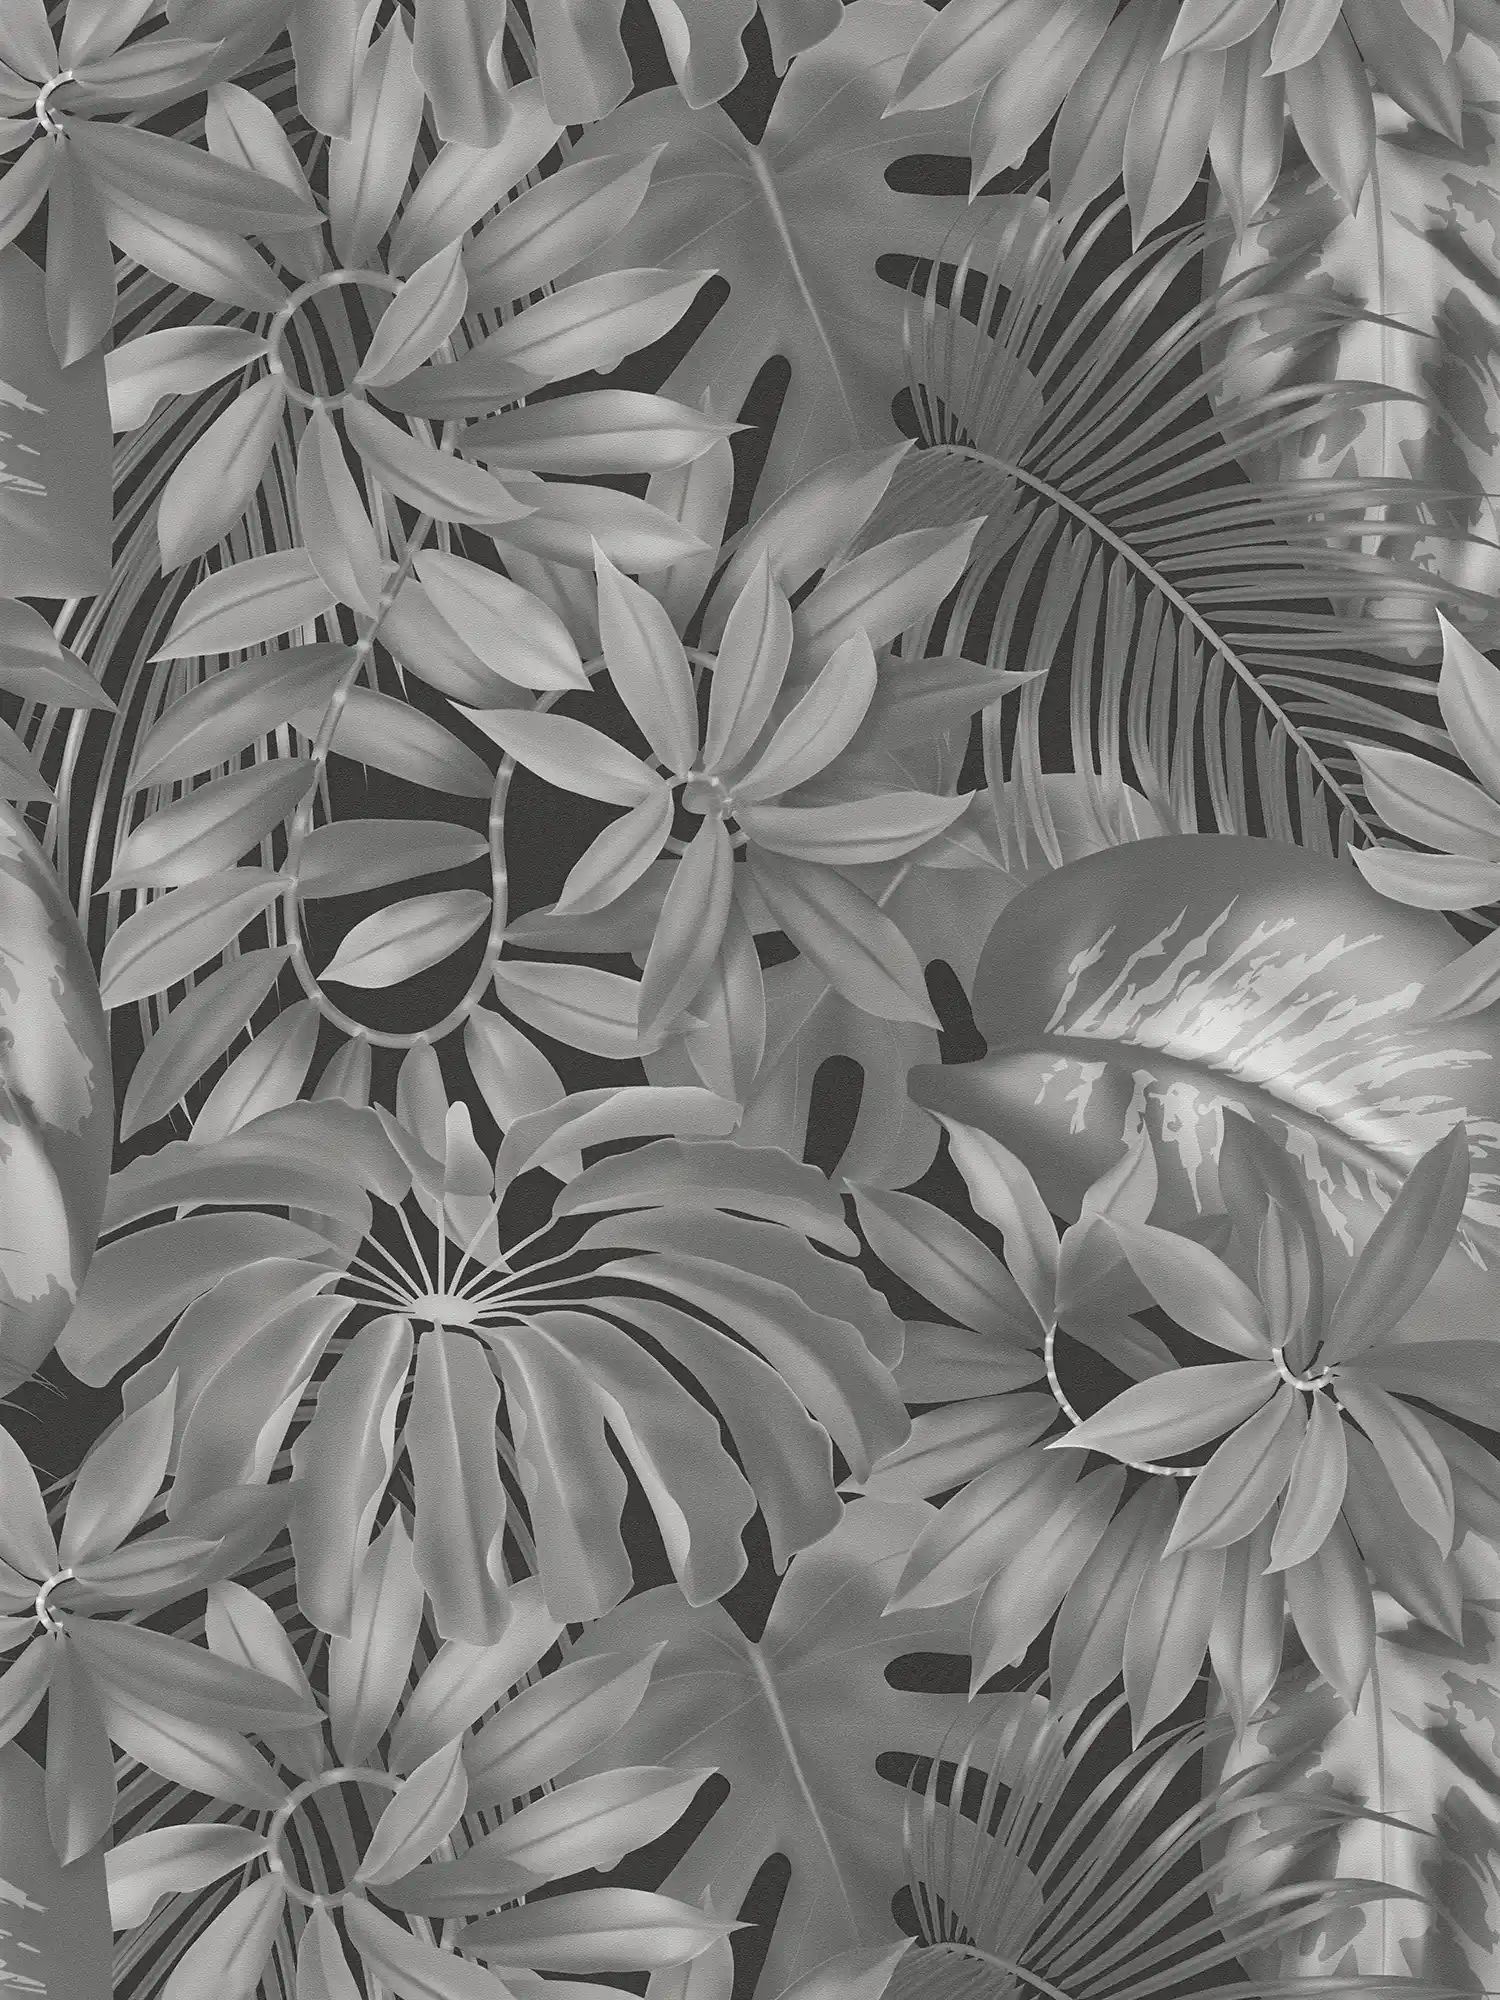 Leaves wallpaper jungle pattern - grey, black
